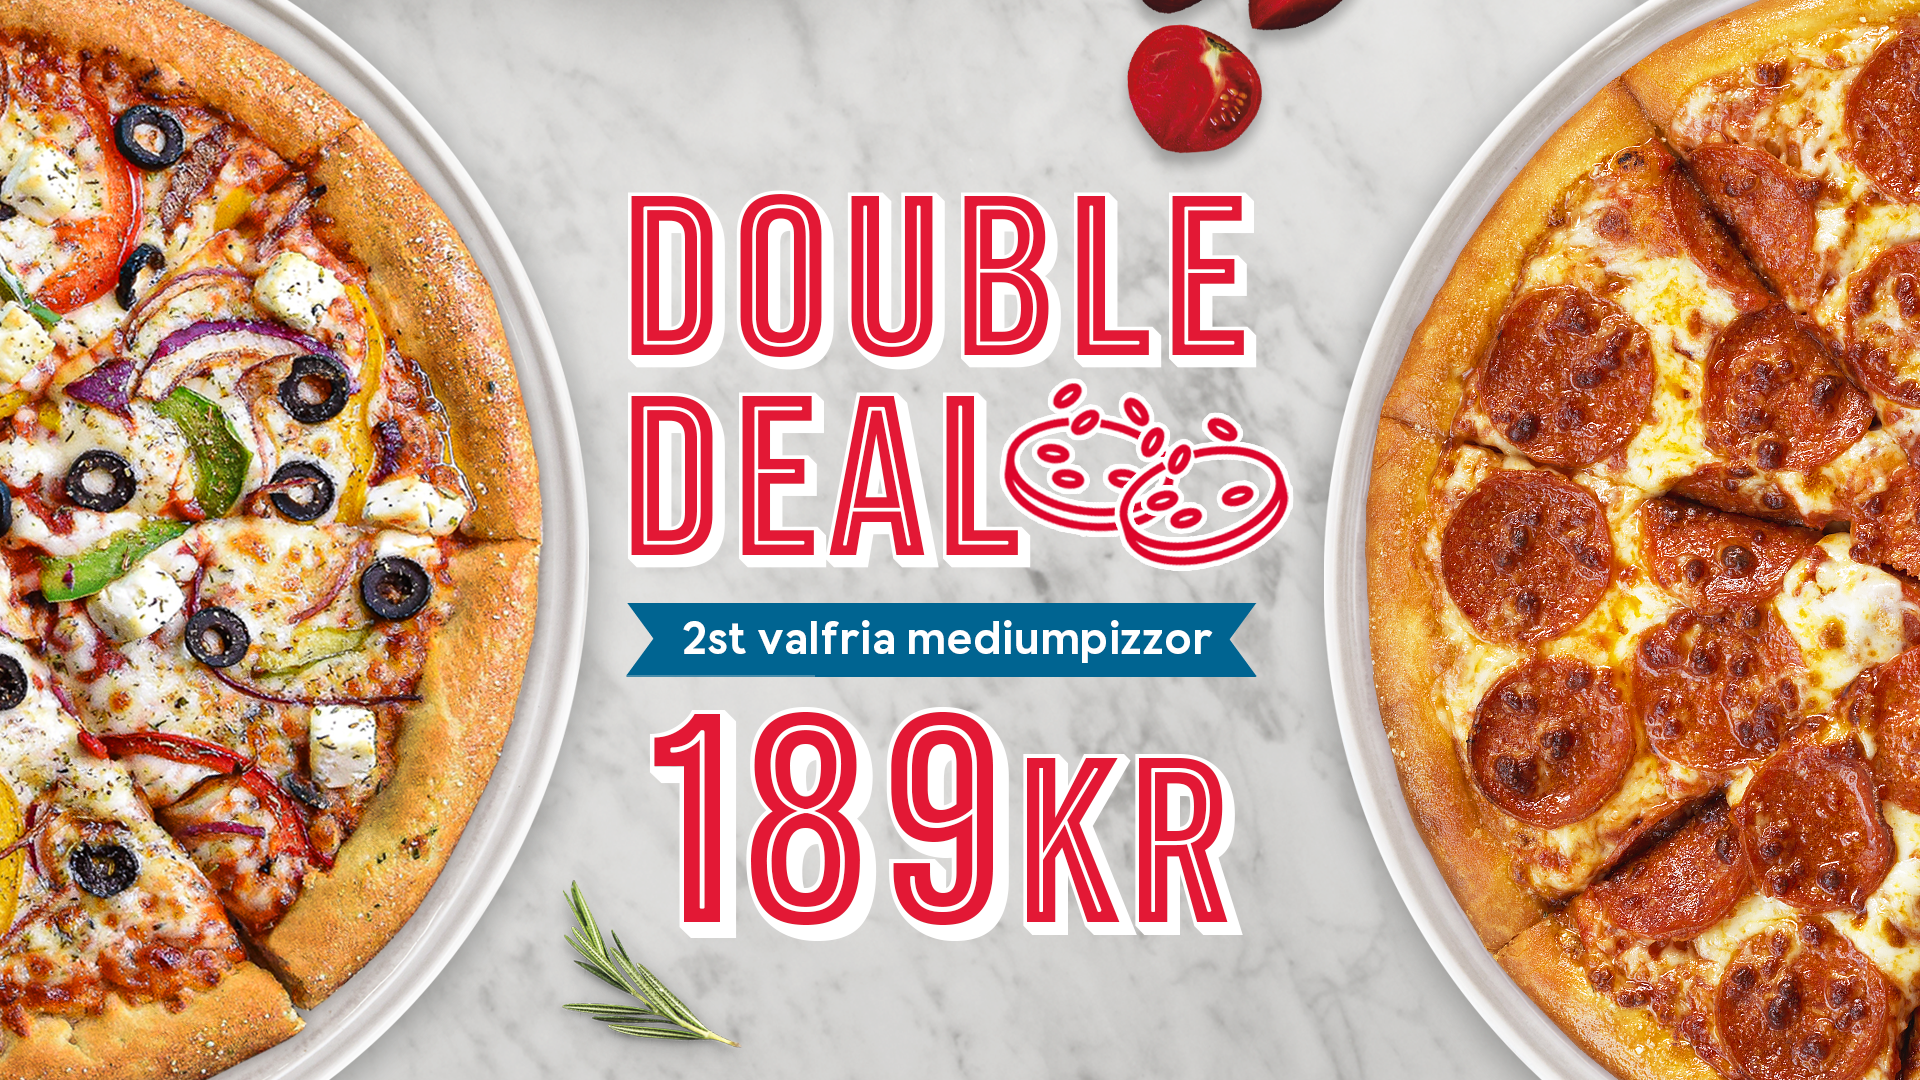 Double deal: 2st valfria mediumpizzor - 189kr